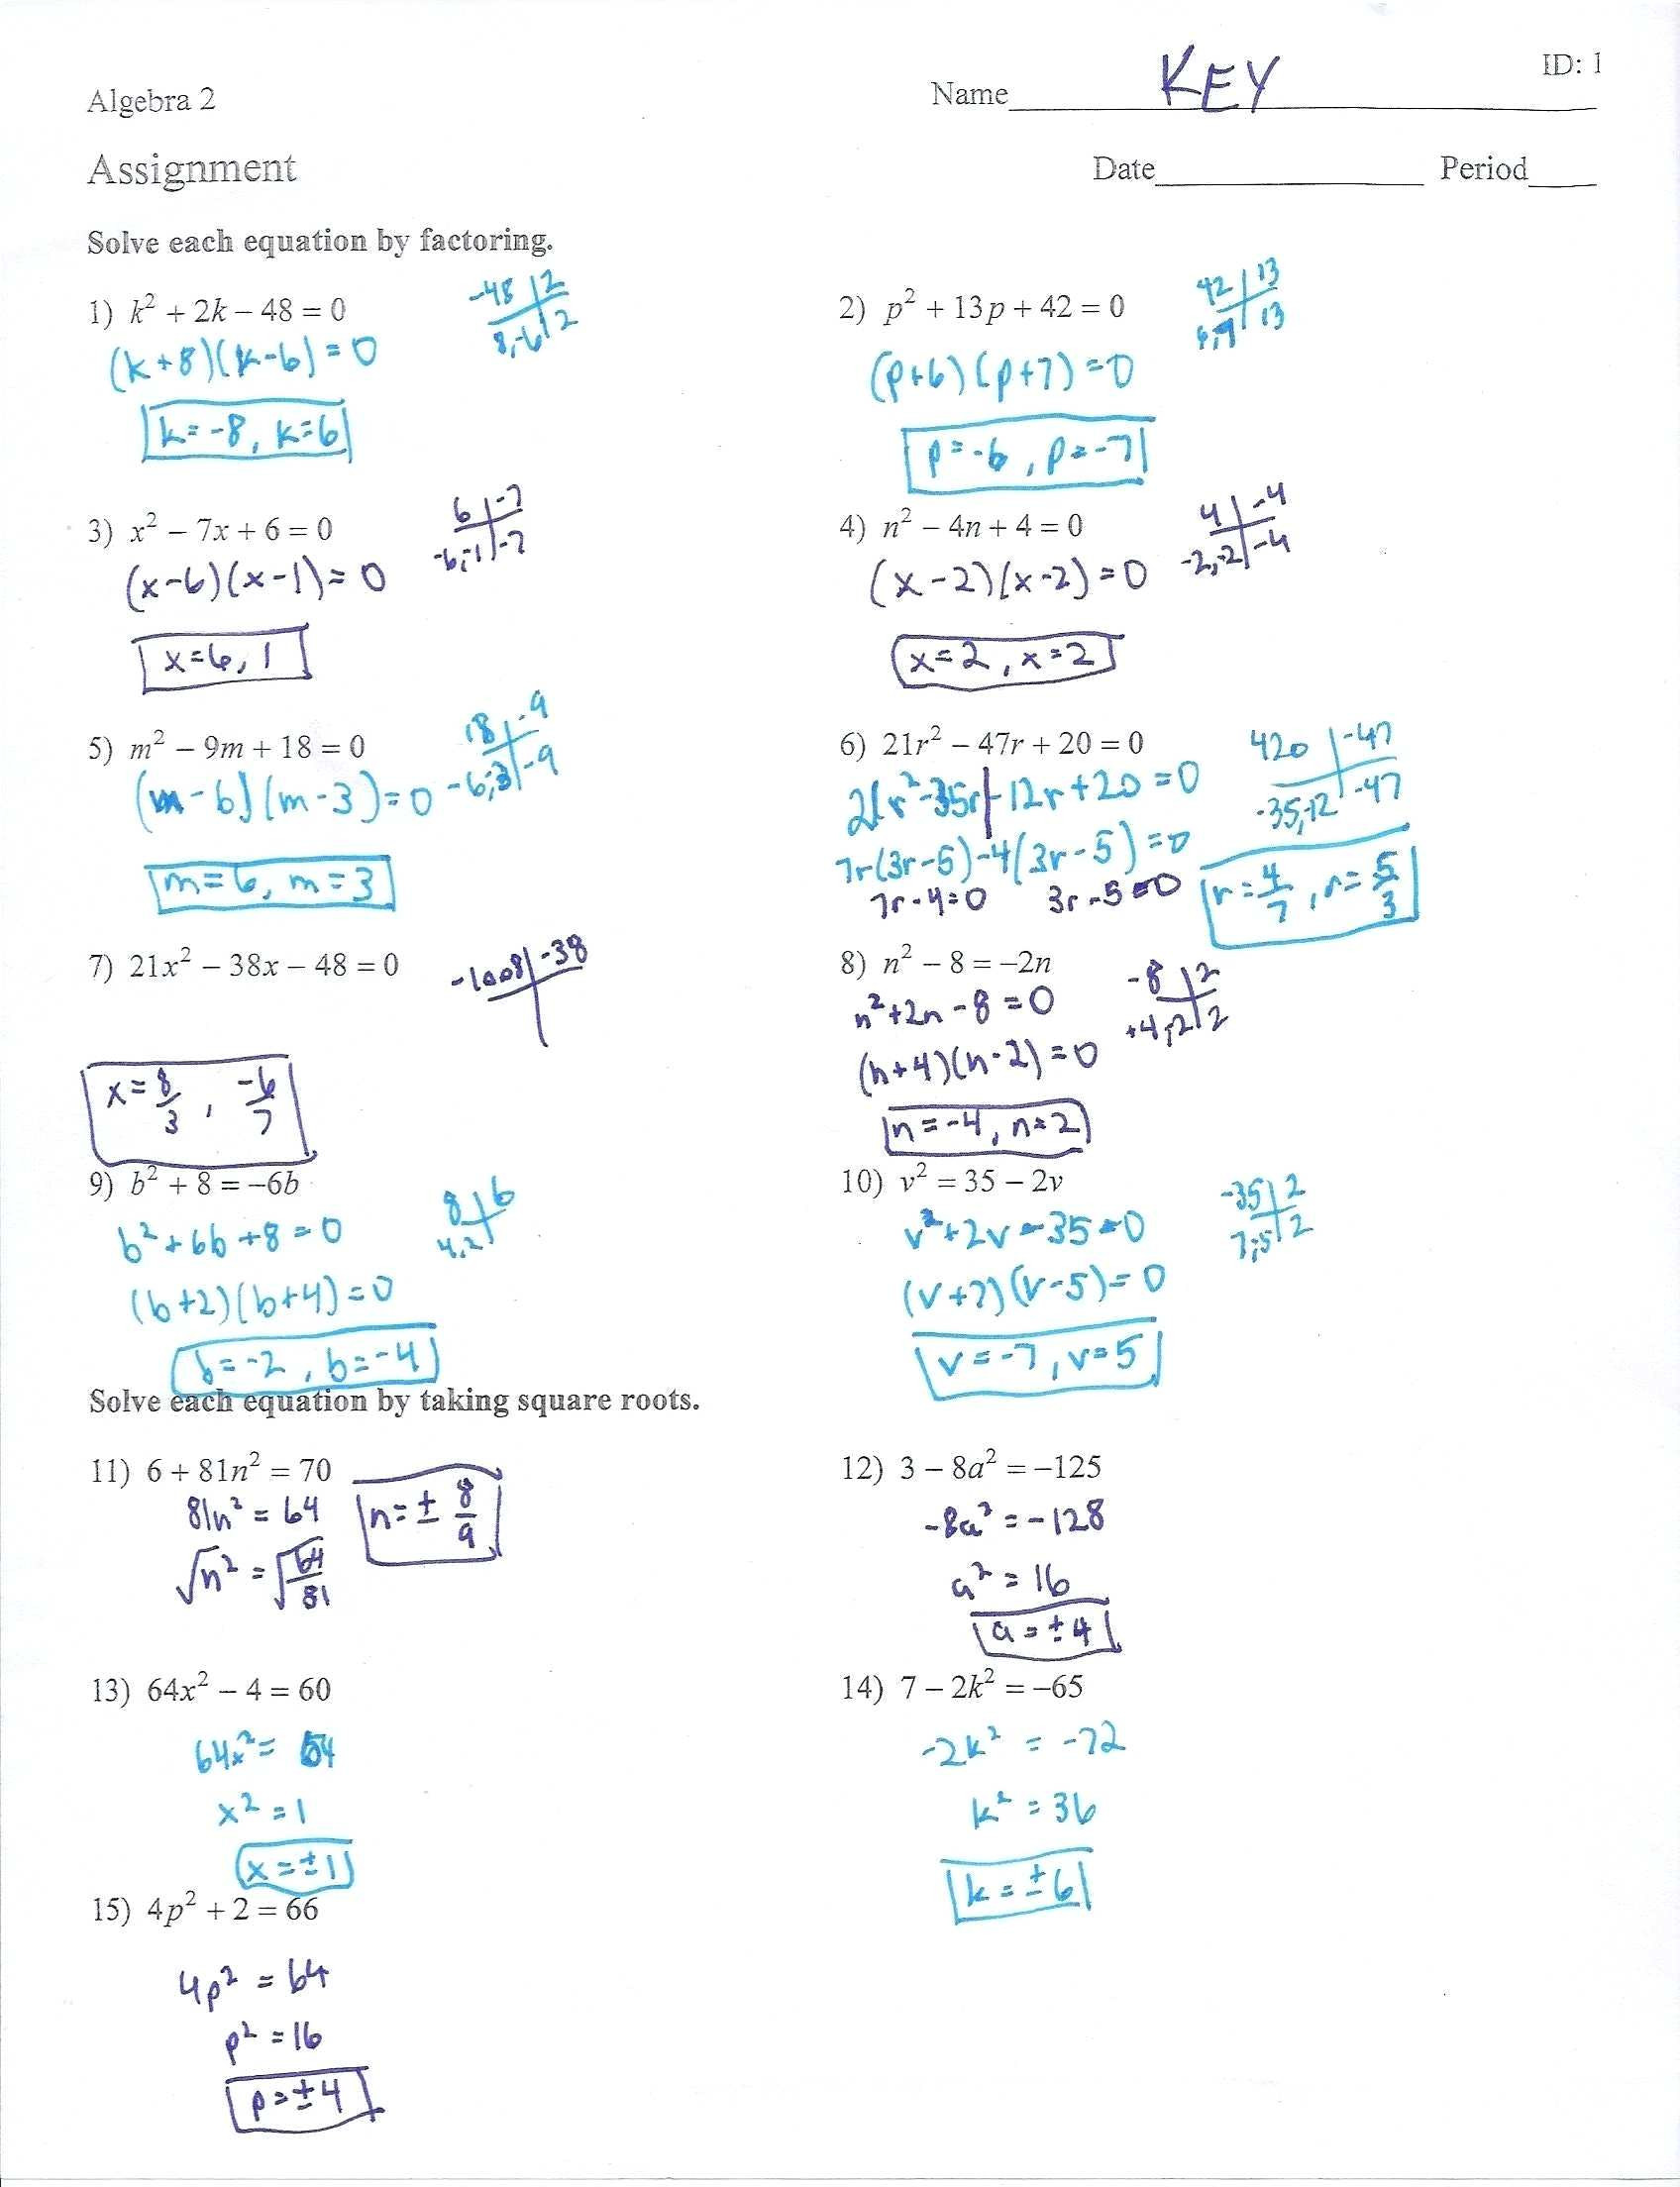 Algebra 2 Factoring Worksheet Algebra 2 Factoring Review Worksheet Answers